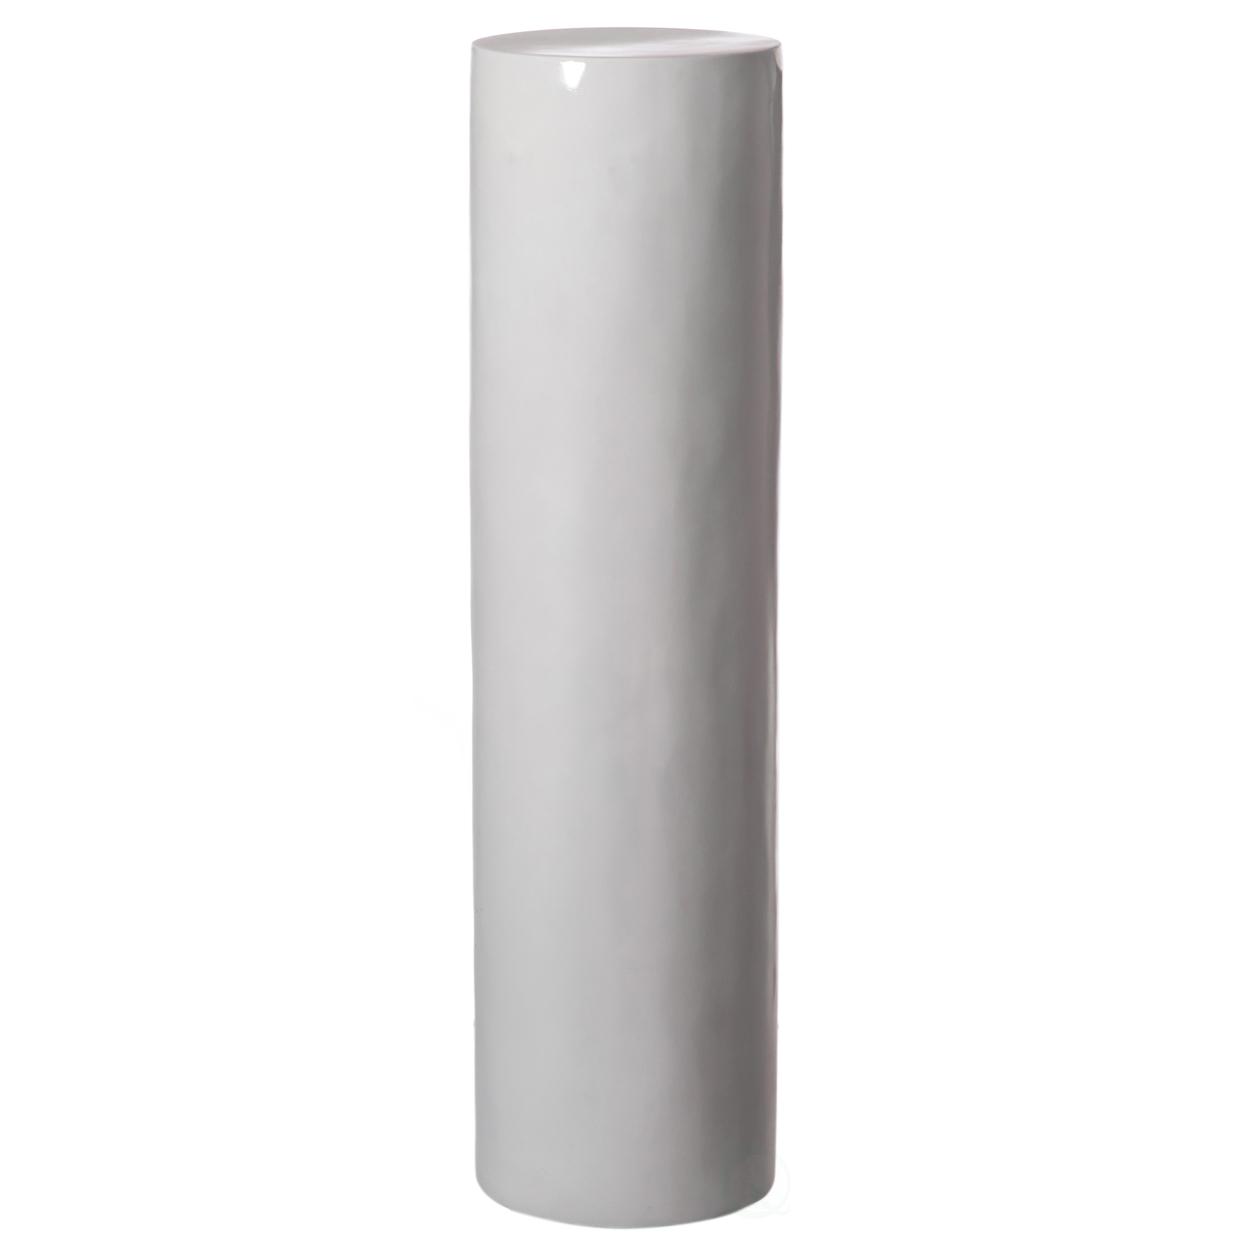 Decorative Modern Fiberglass Pillar Column Flower Stand Cylinder Shape Pedestal For Wedding, Living Room, Or Dining Room - Tall 51